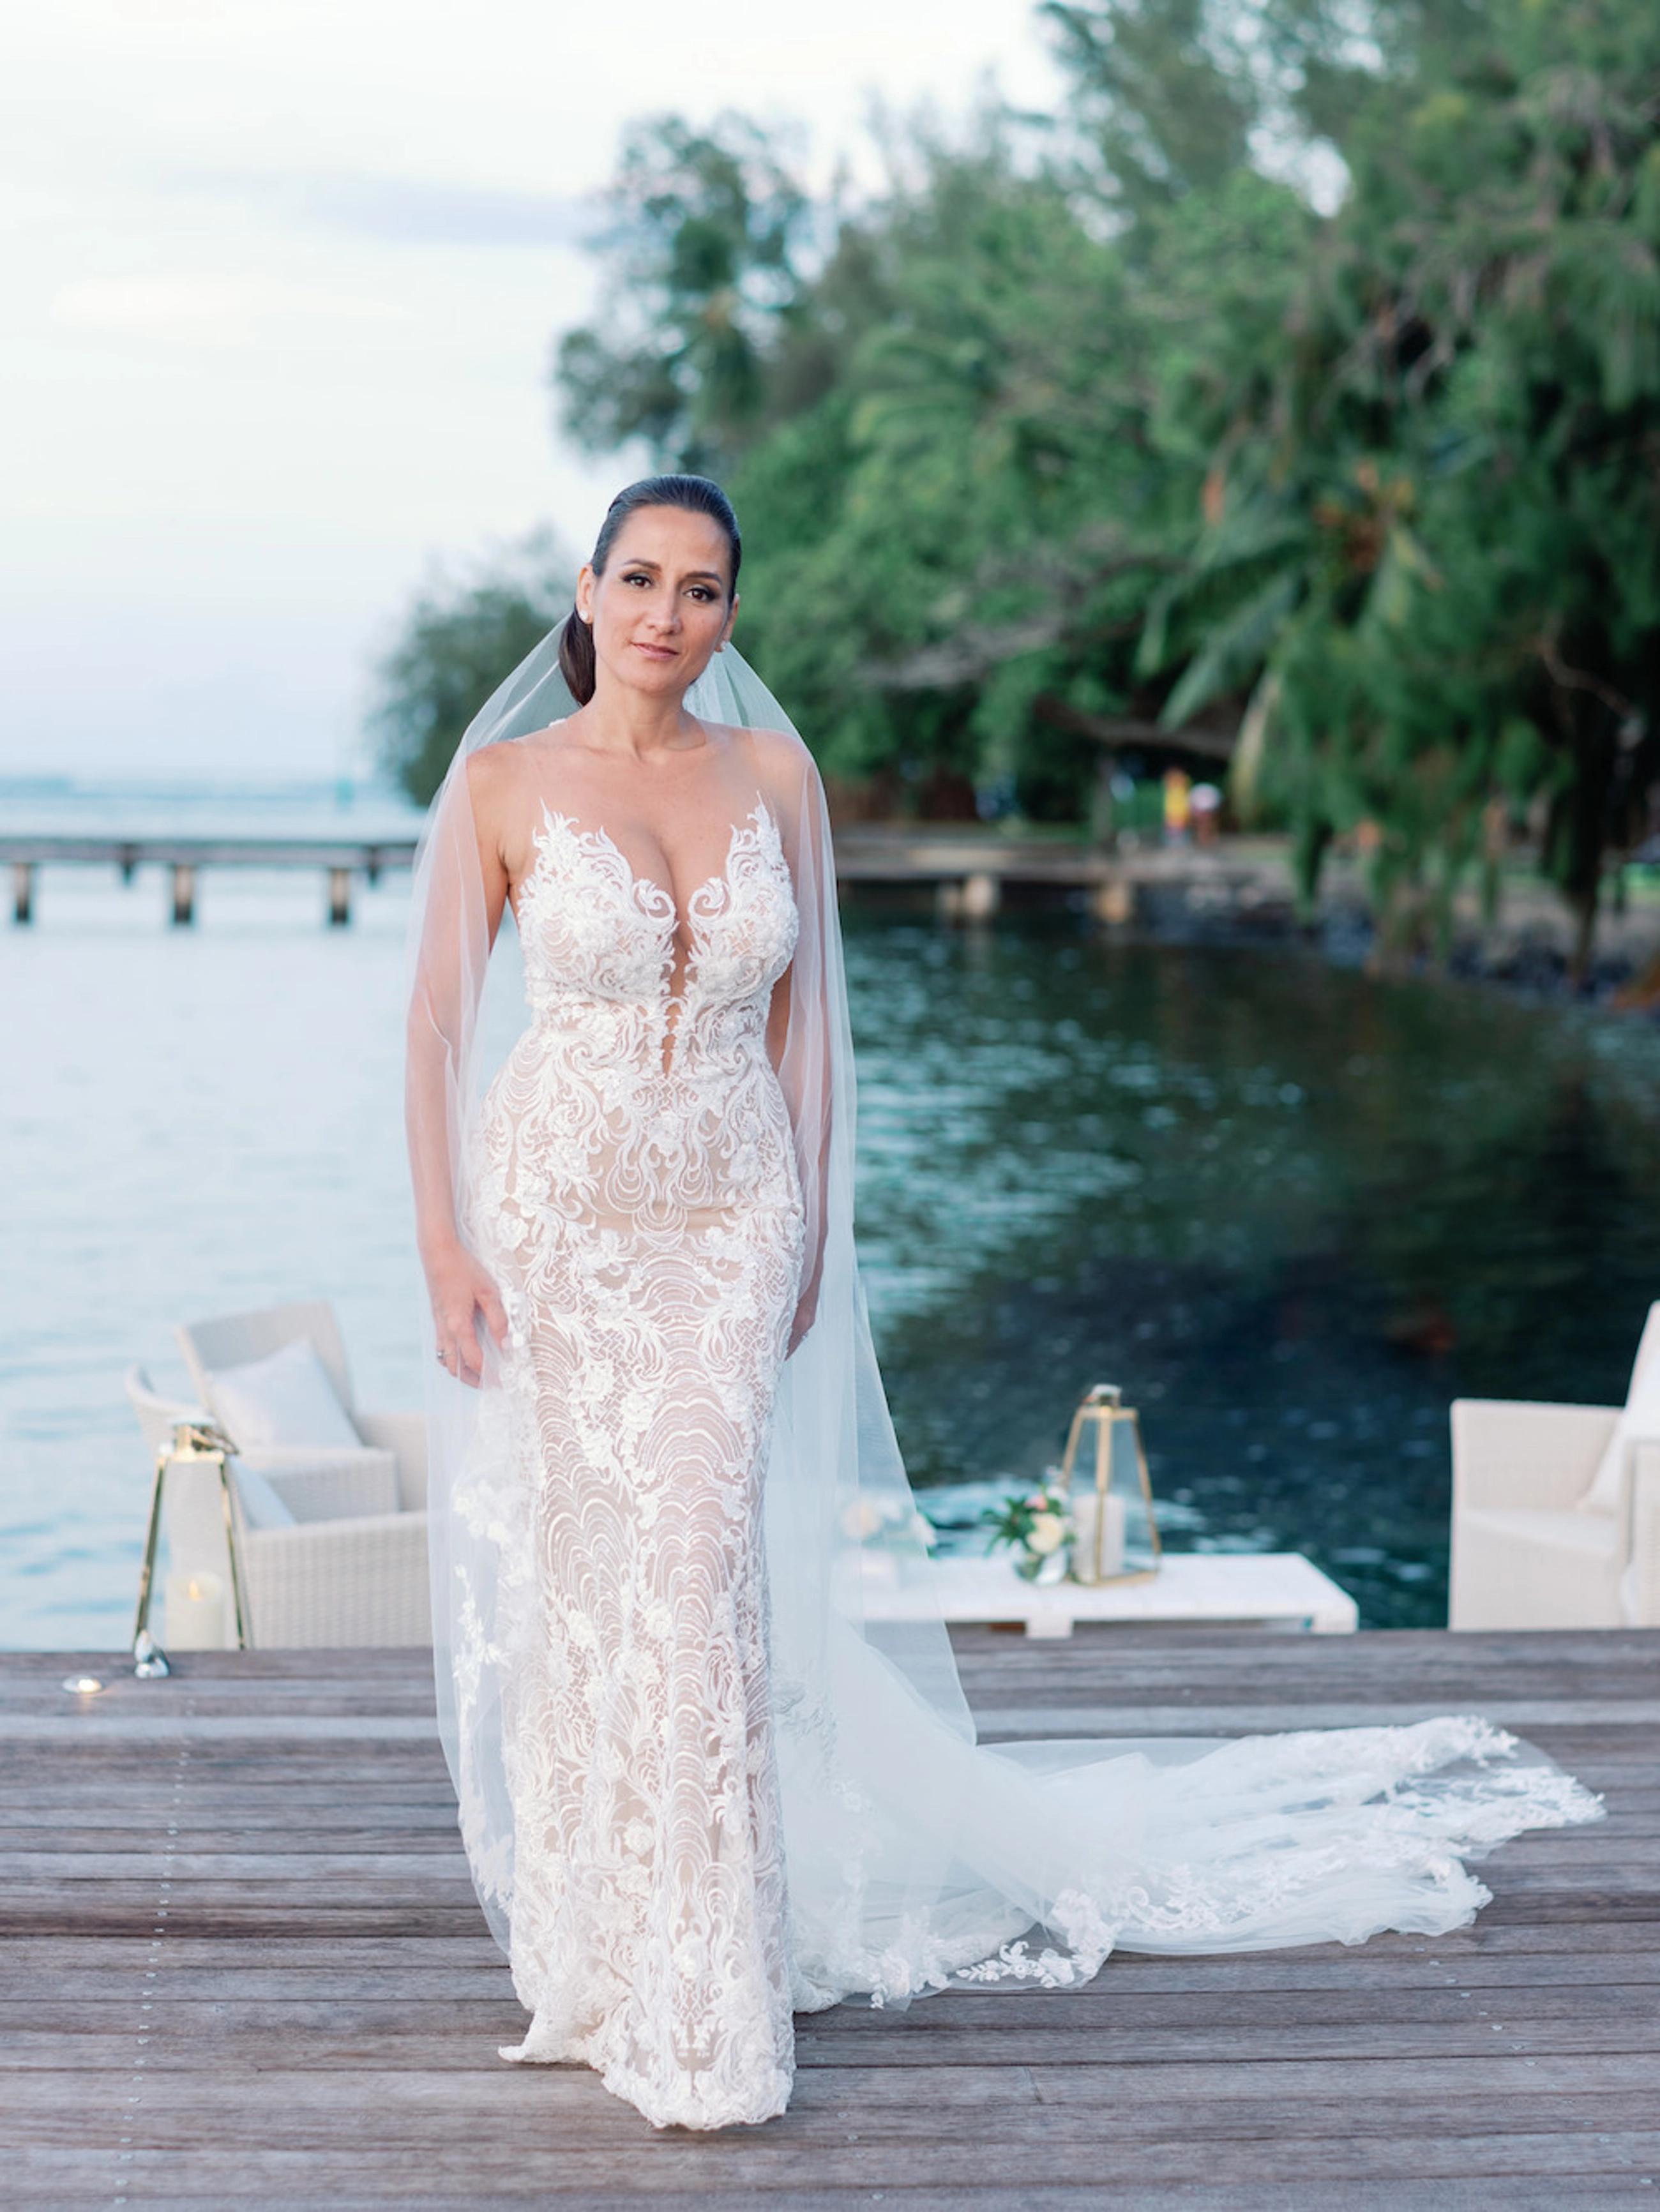 Leiana Wears Illusion Lace Bridal Dress for Tahiti Wedding. Desktop Image